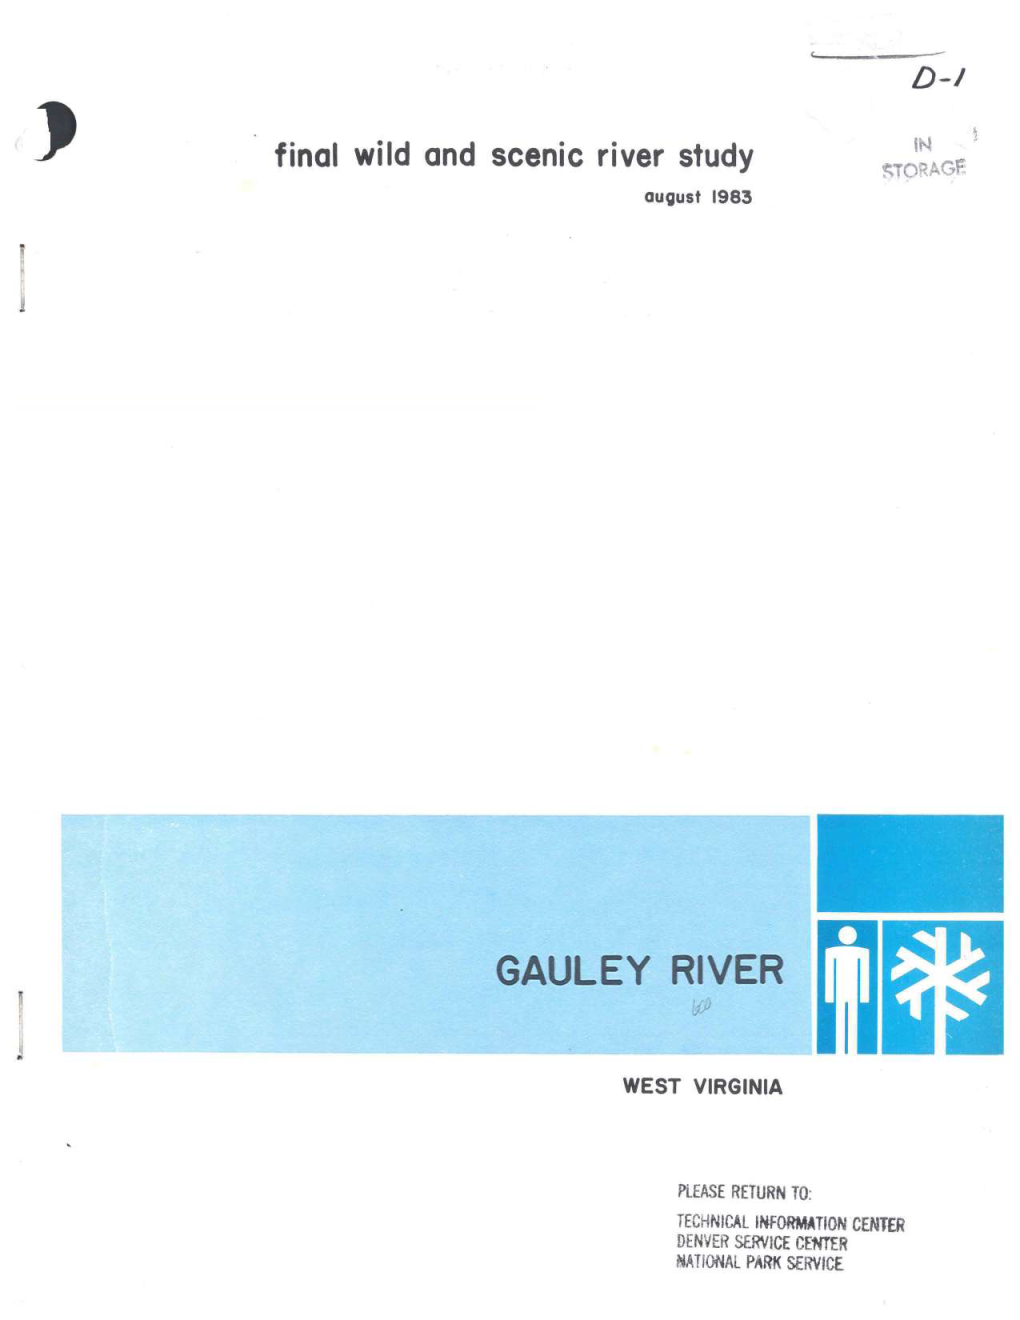 GAULEY RIVER Ifjj